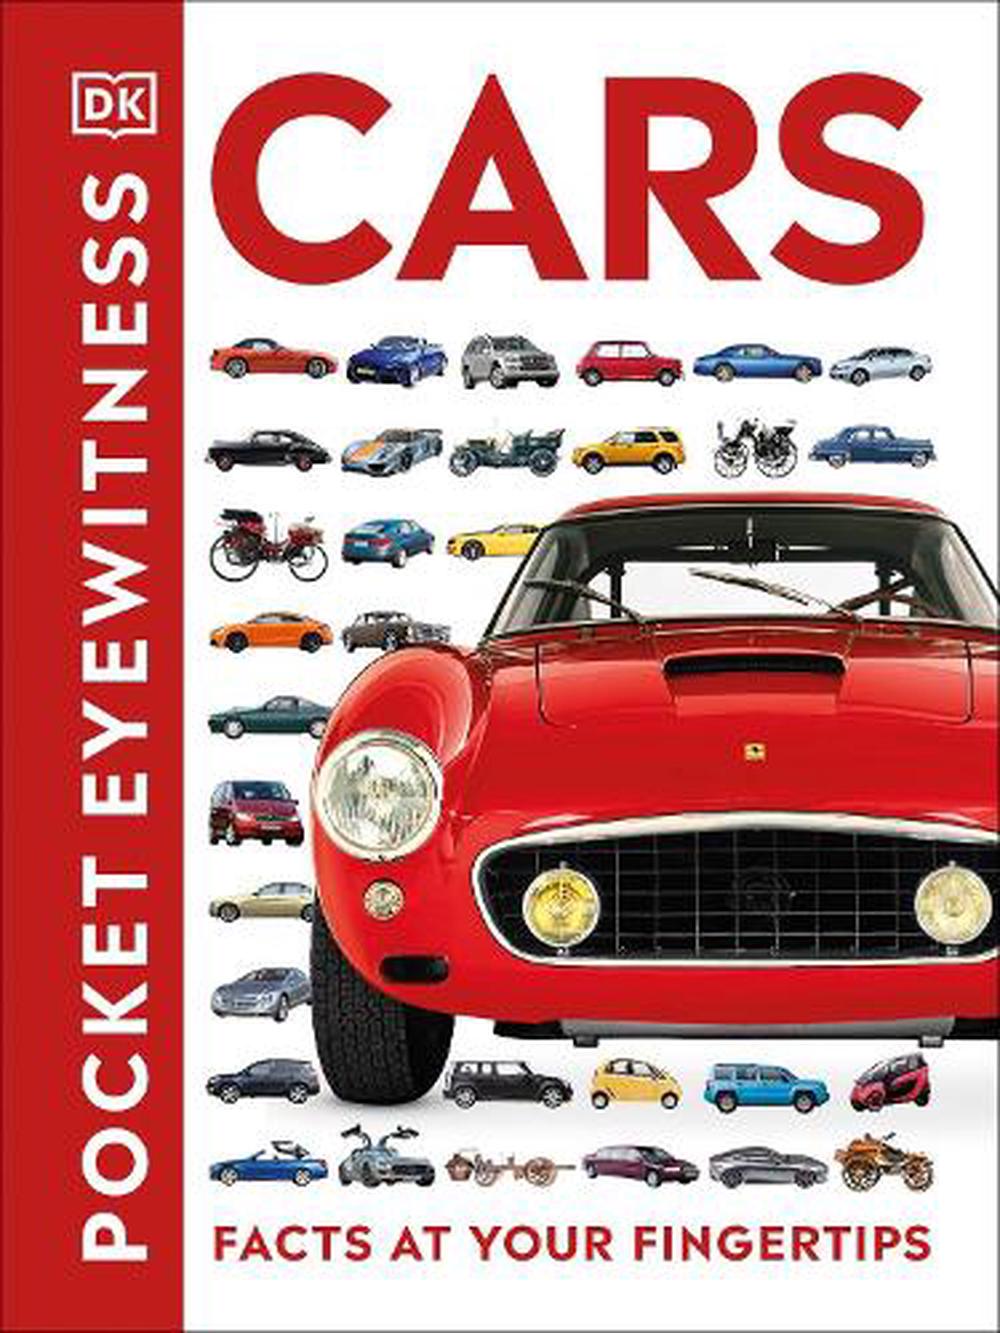 online　Cars　Buy　9780241343708　Paperback,　DK,　by　Eyewitness　Pocket　Nile　at　The